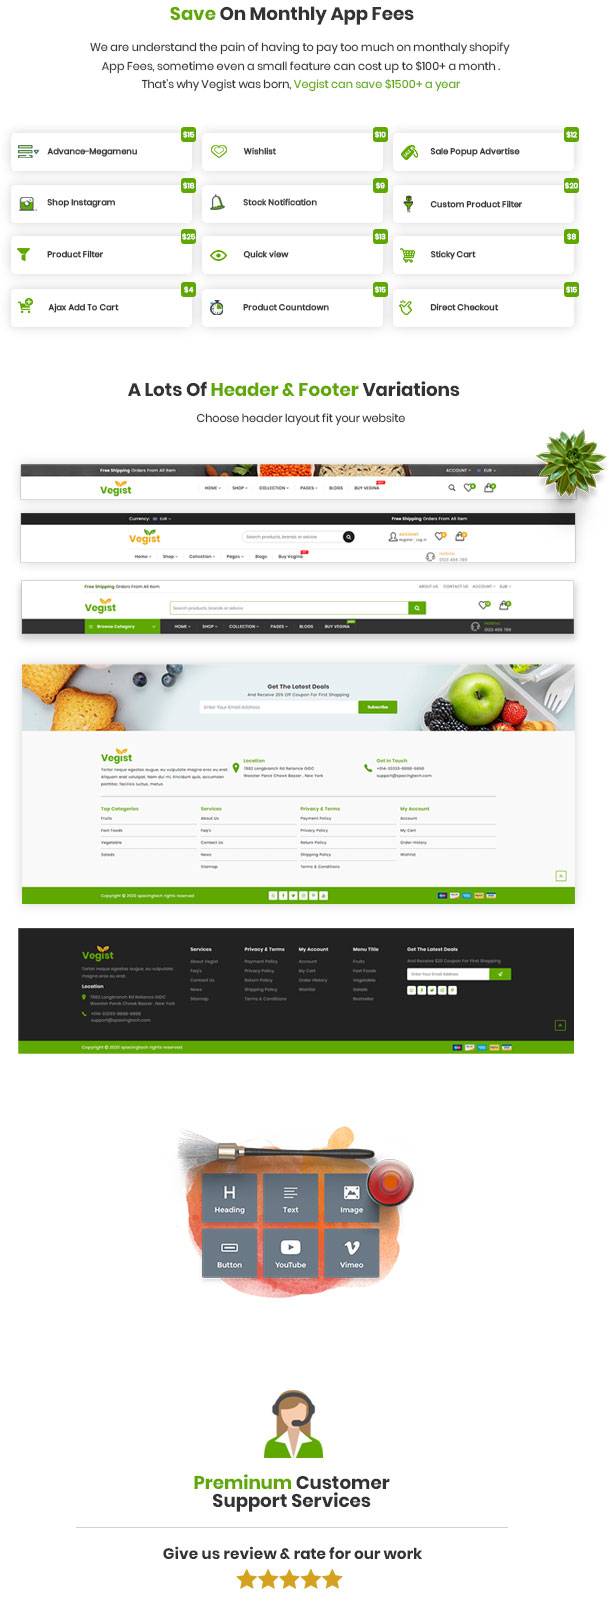 Vegist - The  Vegetables, Supermarket & Organic Food eCommerce Shopify Theme - 14